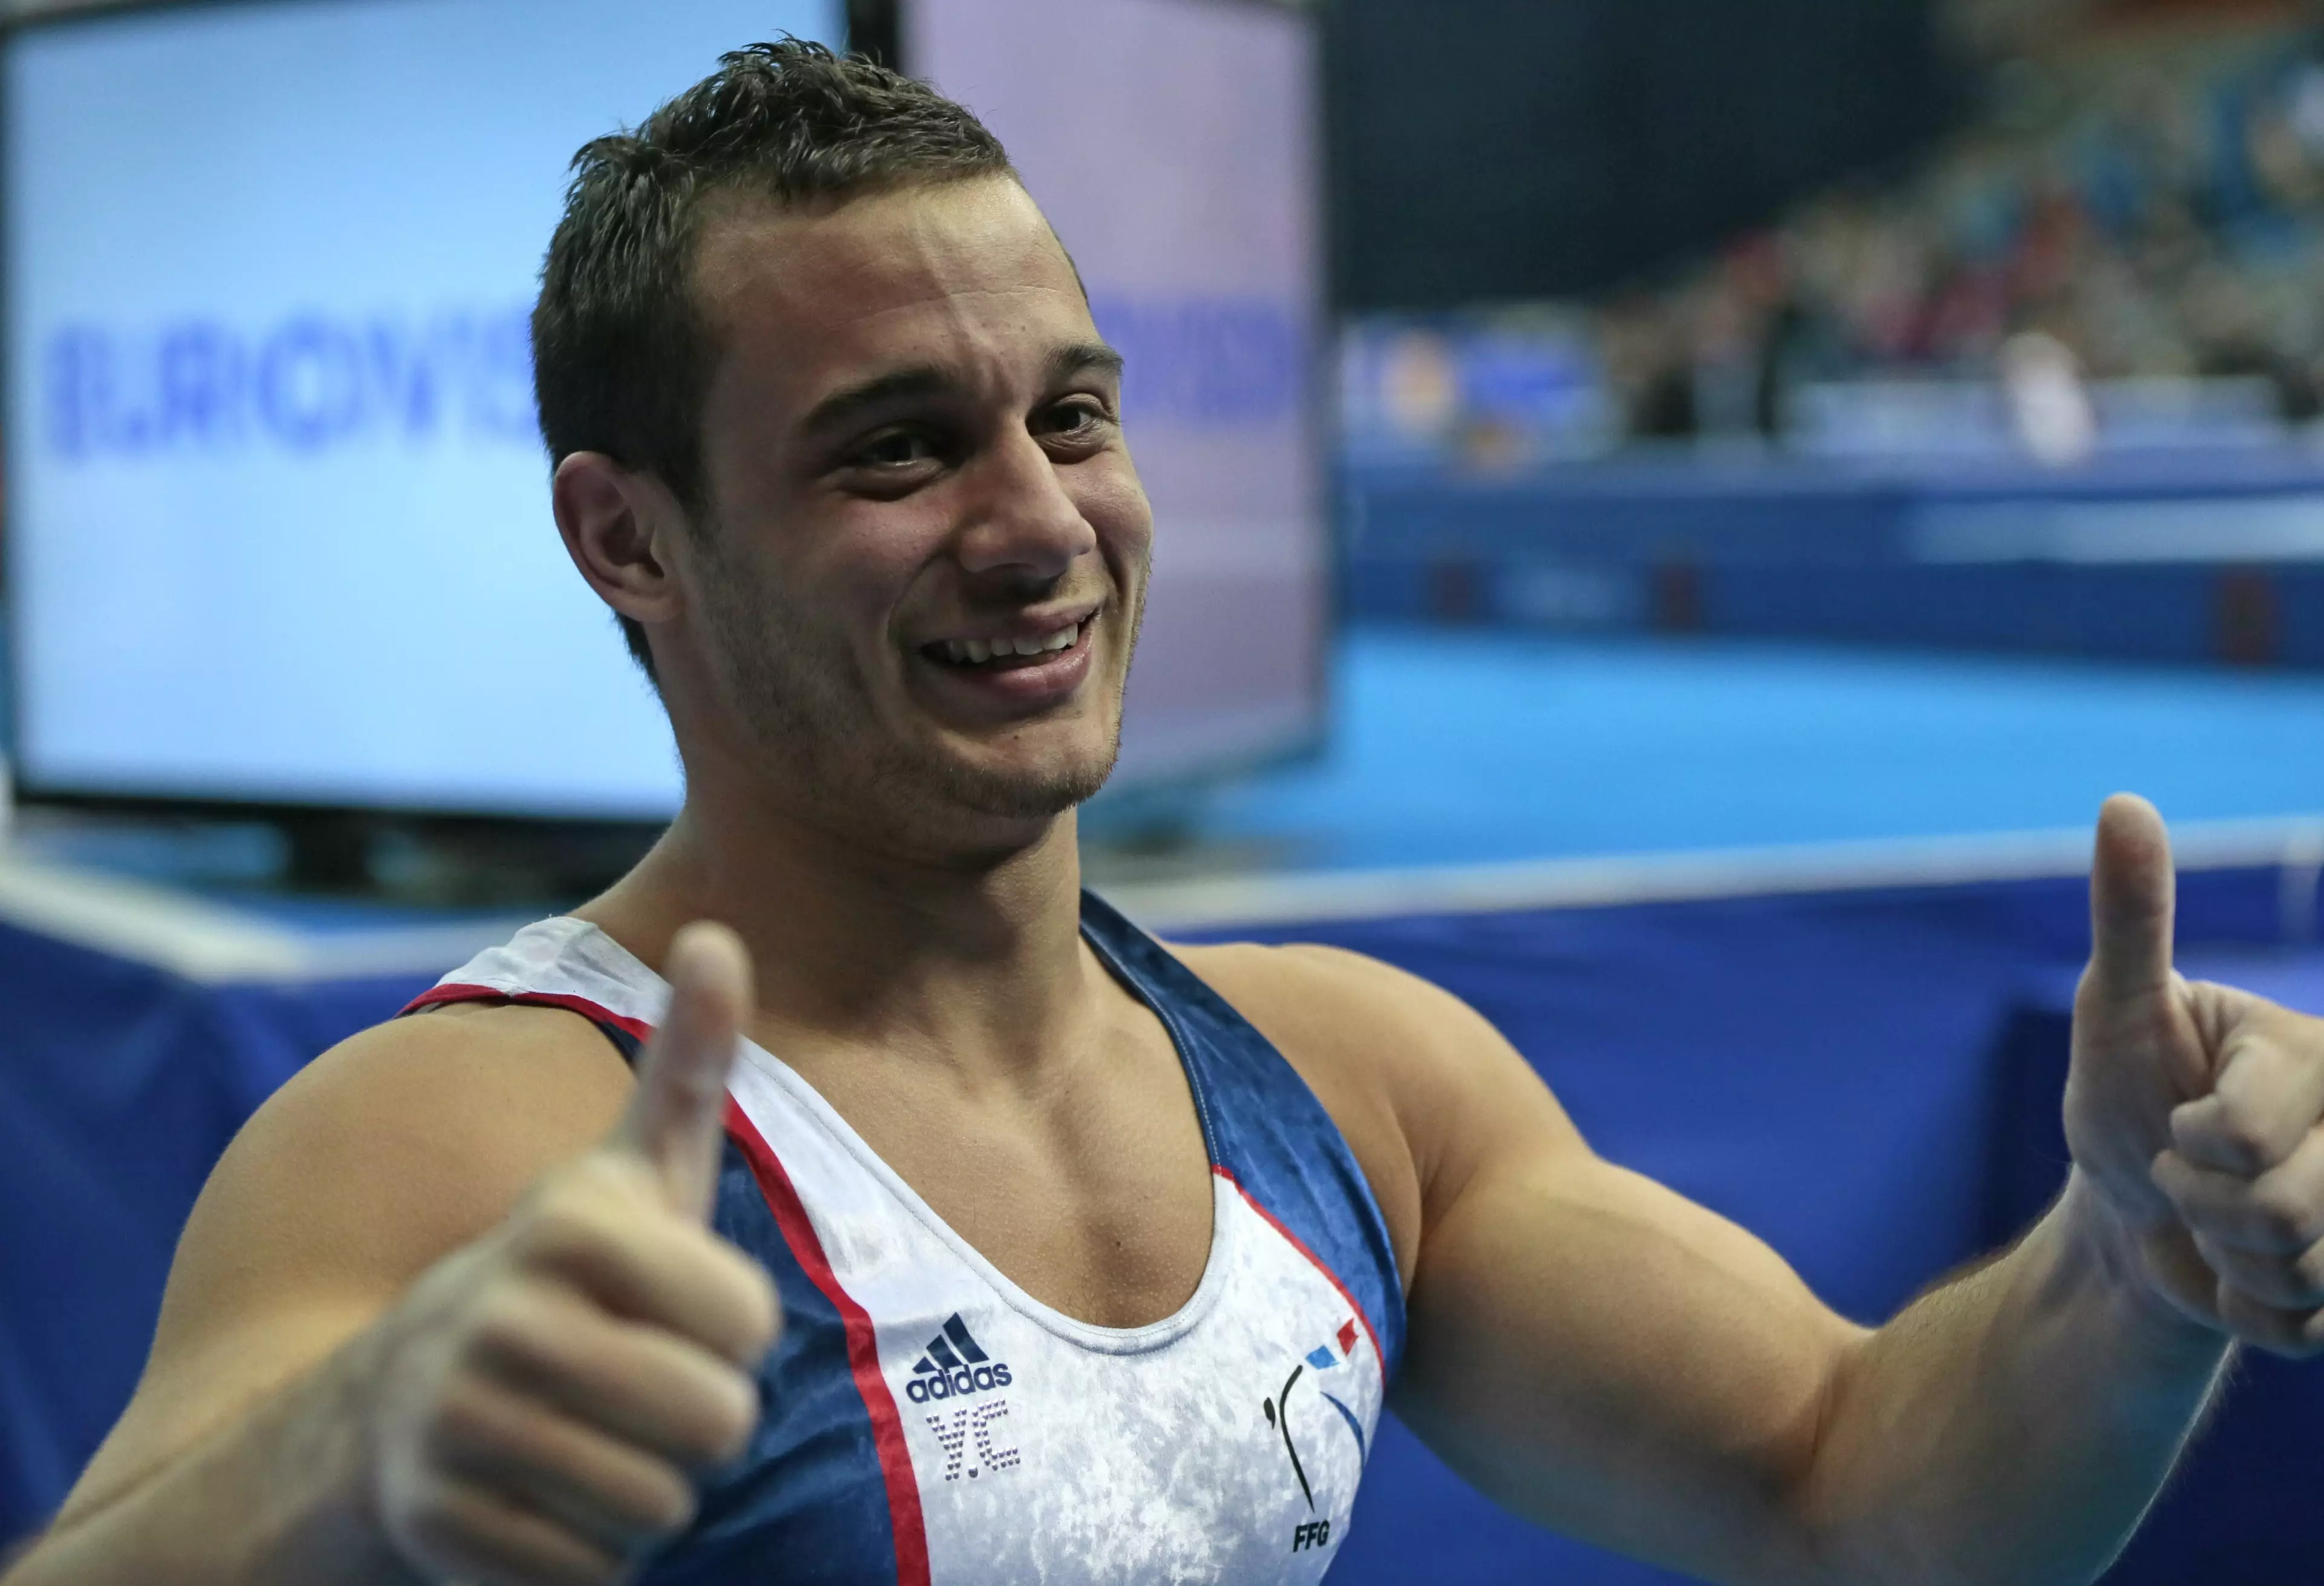 Gymnast Samir Ait Said Shares Update After Horrific Rio Olympics Injury